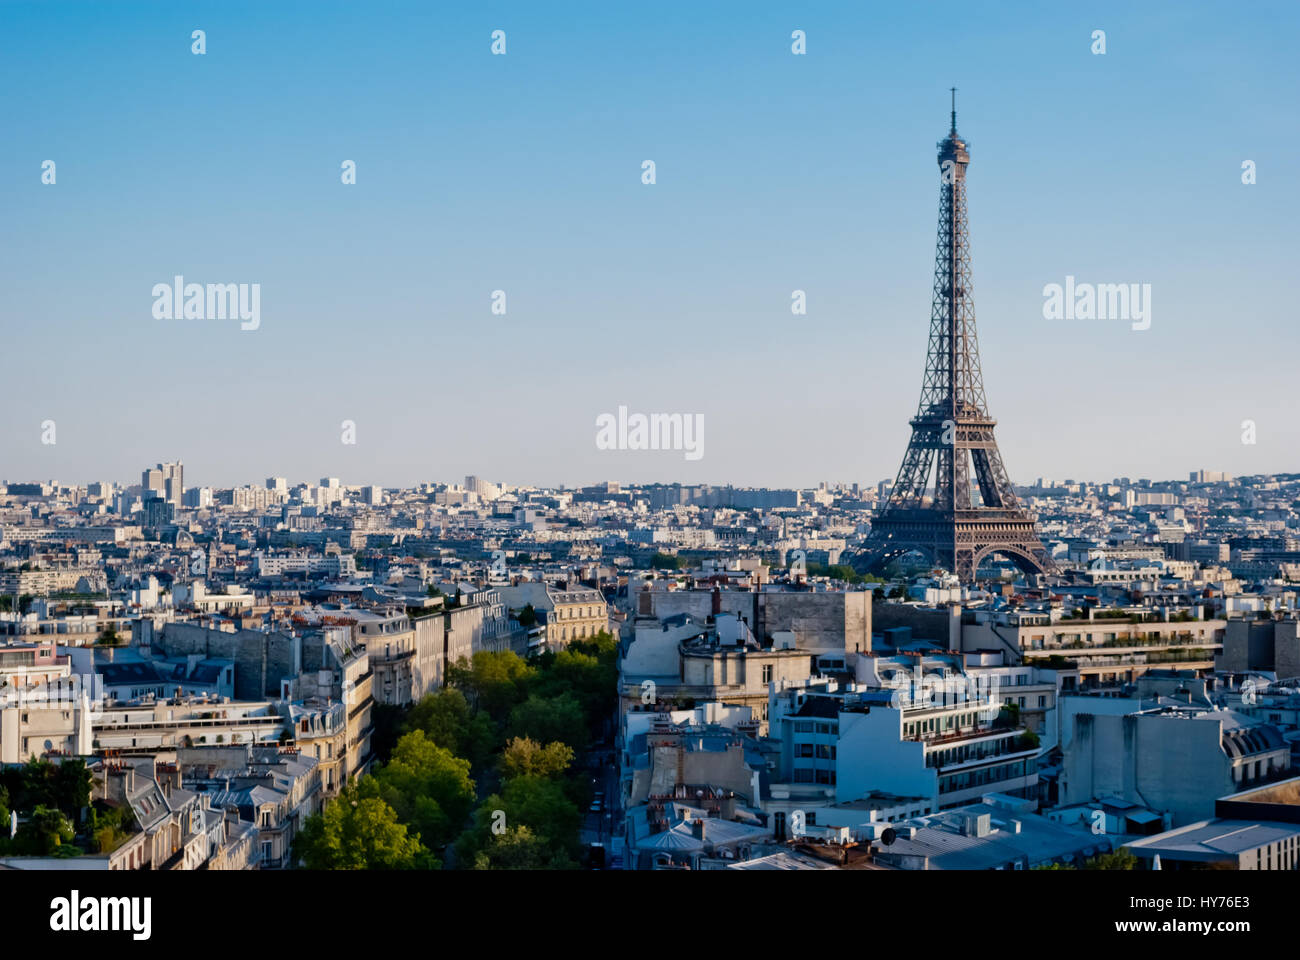 Paris Tour Eiffel vista panoramica ad alta definizione Foto stock - Alamy